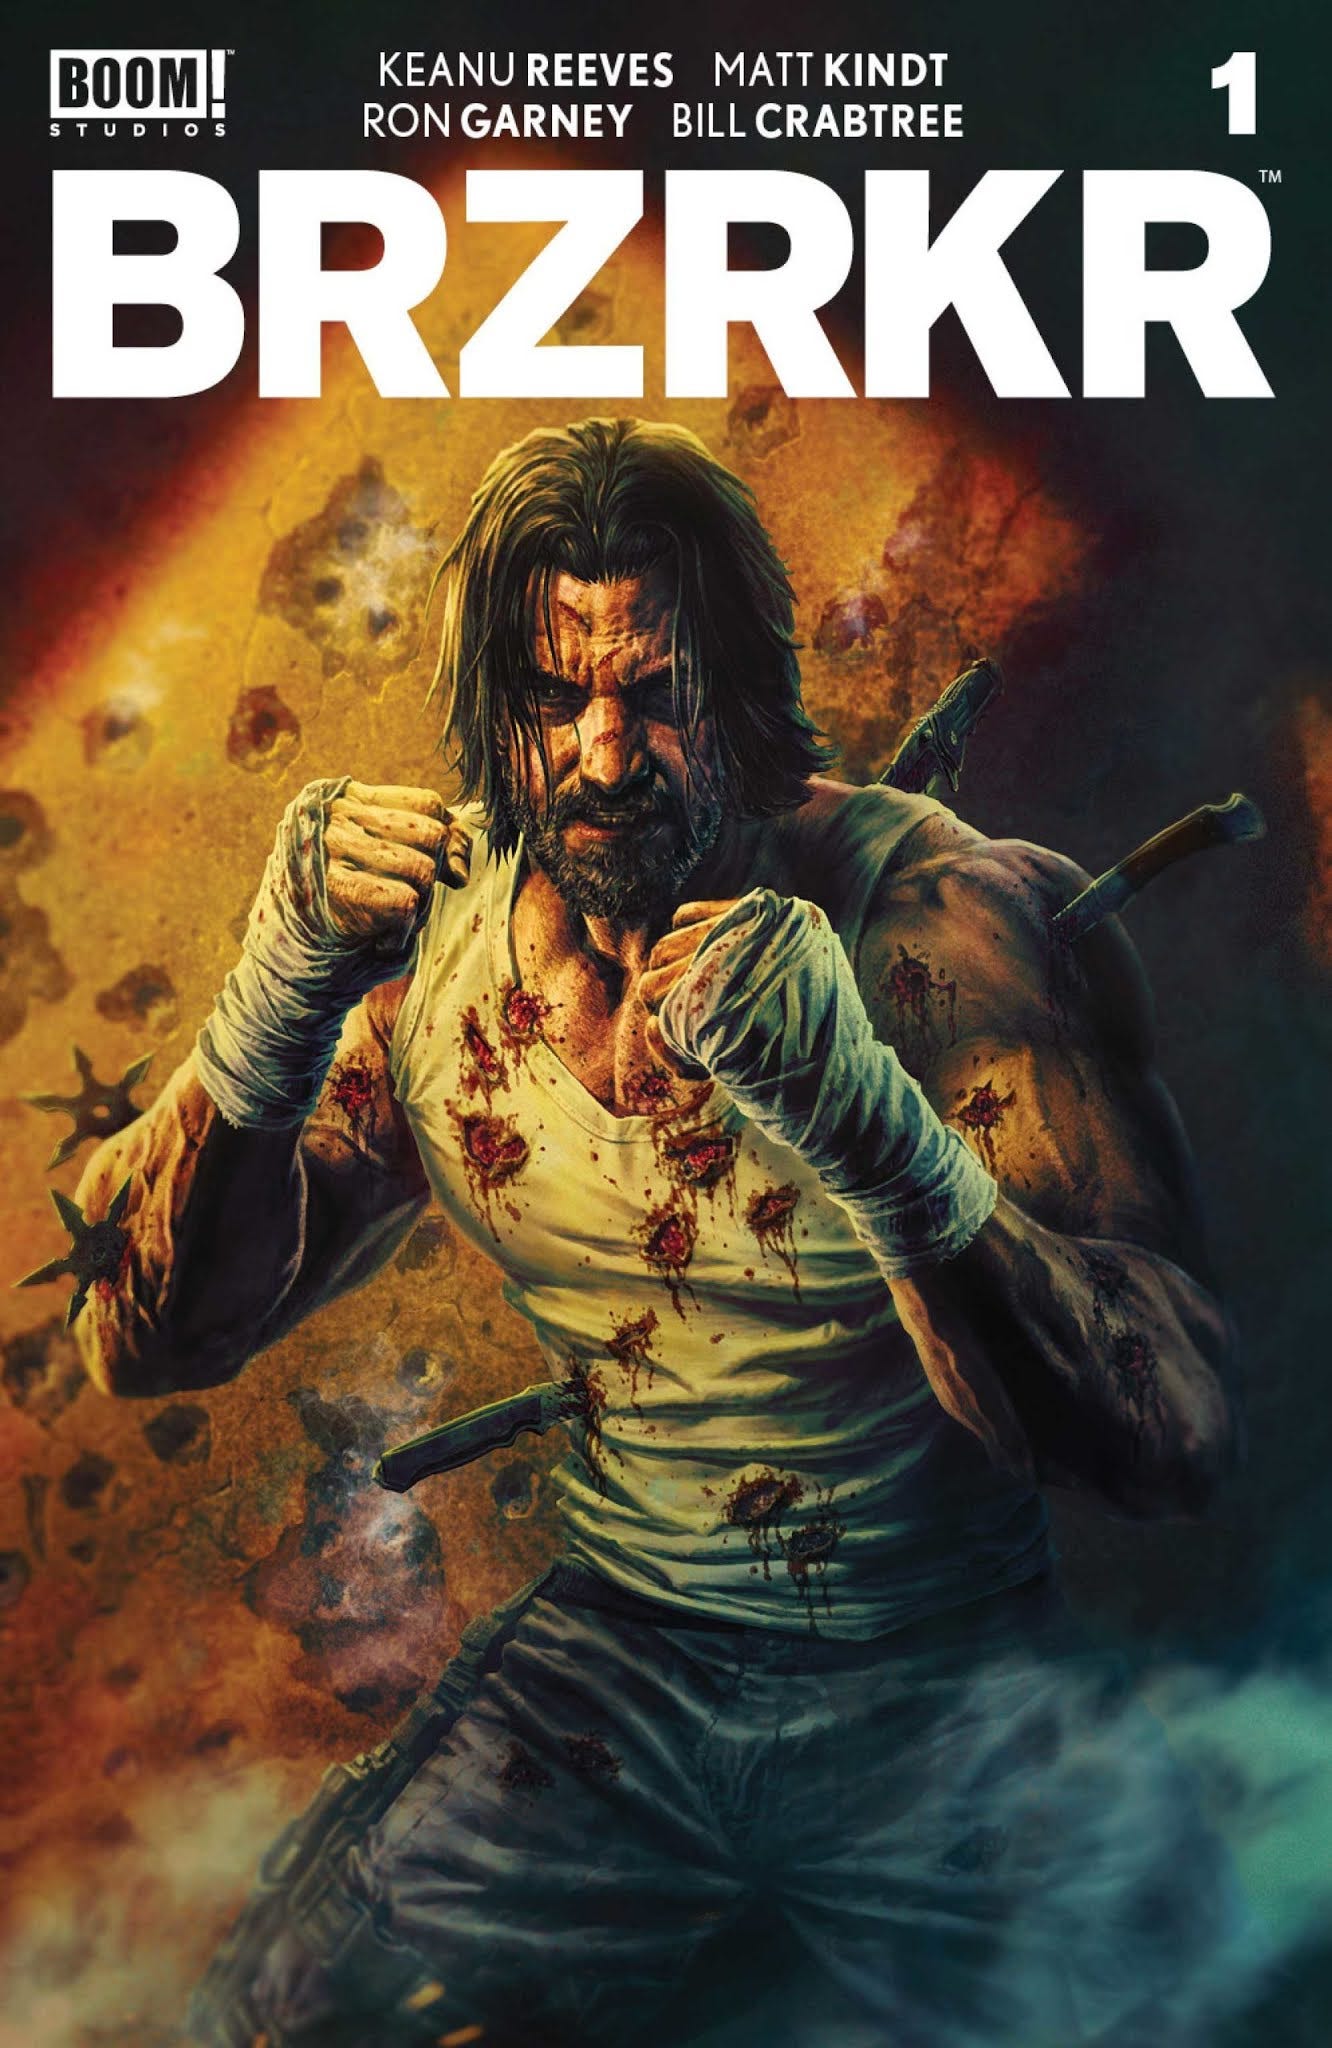 Brzrkr #1 Review!